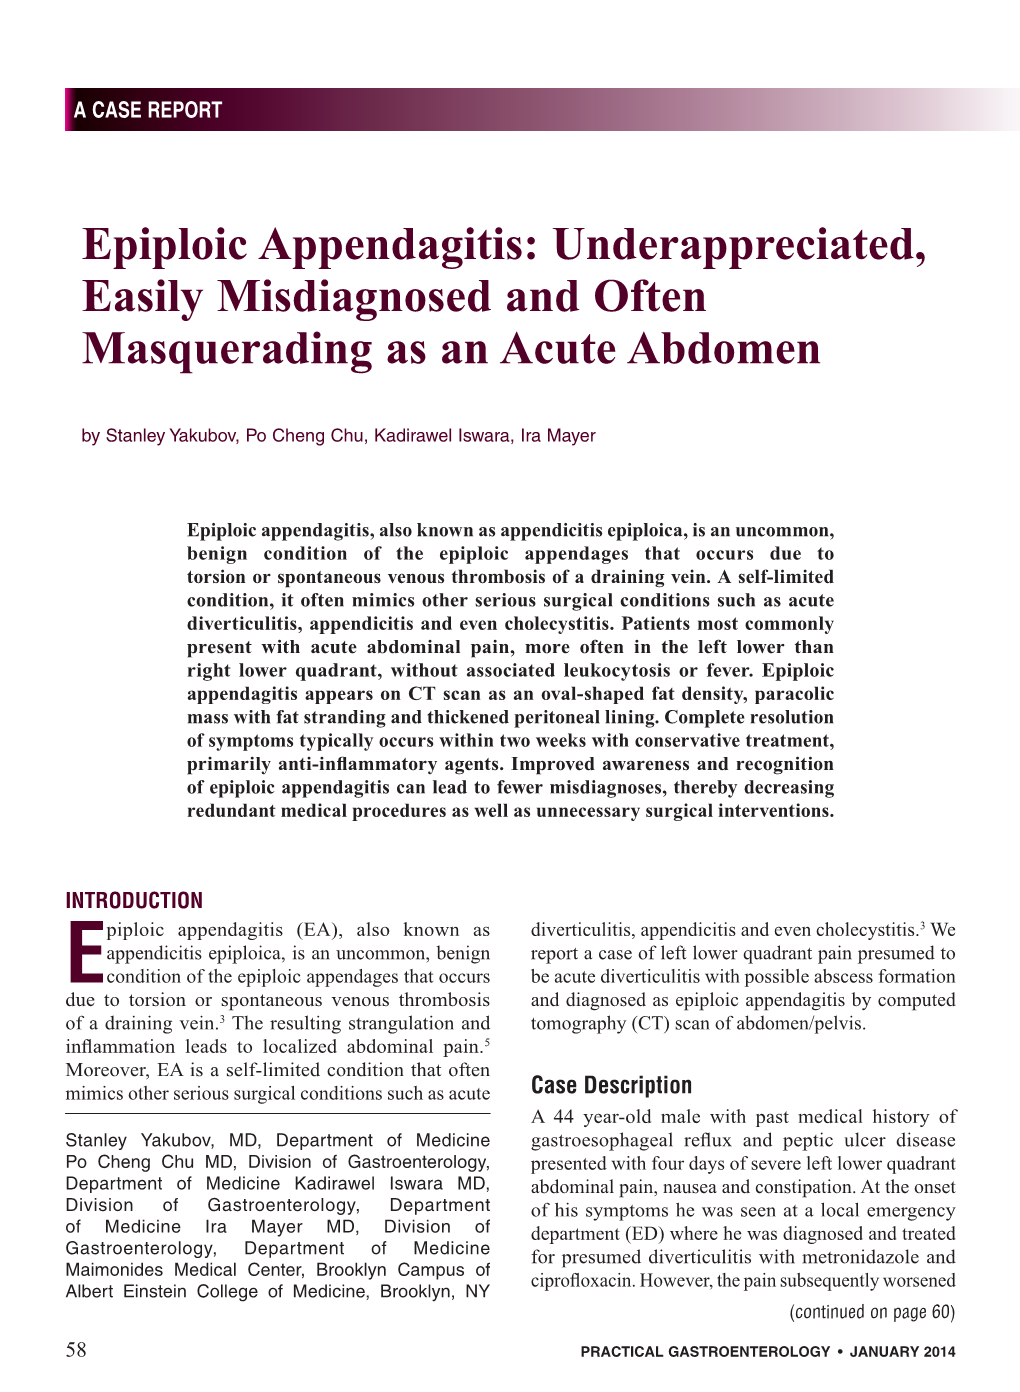 Epiploic Appendagitis: Underappreciated, Easily Misdiagnosed and Often Masquerading As an Acute Abdomen